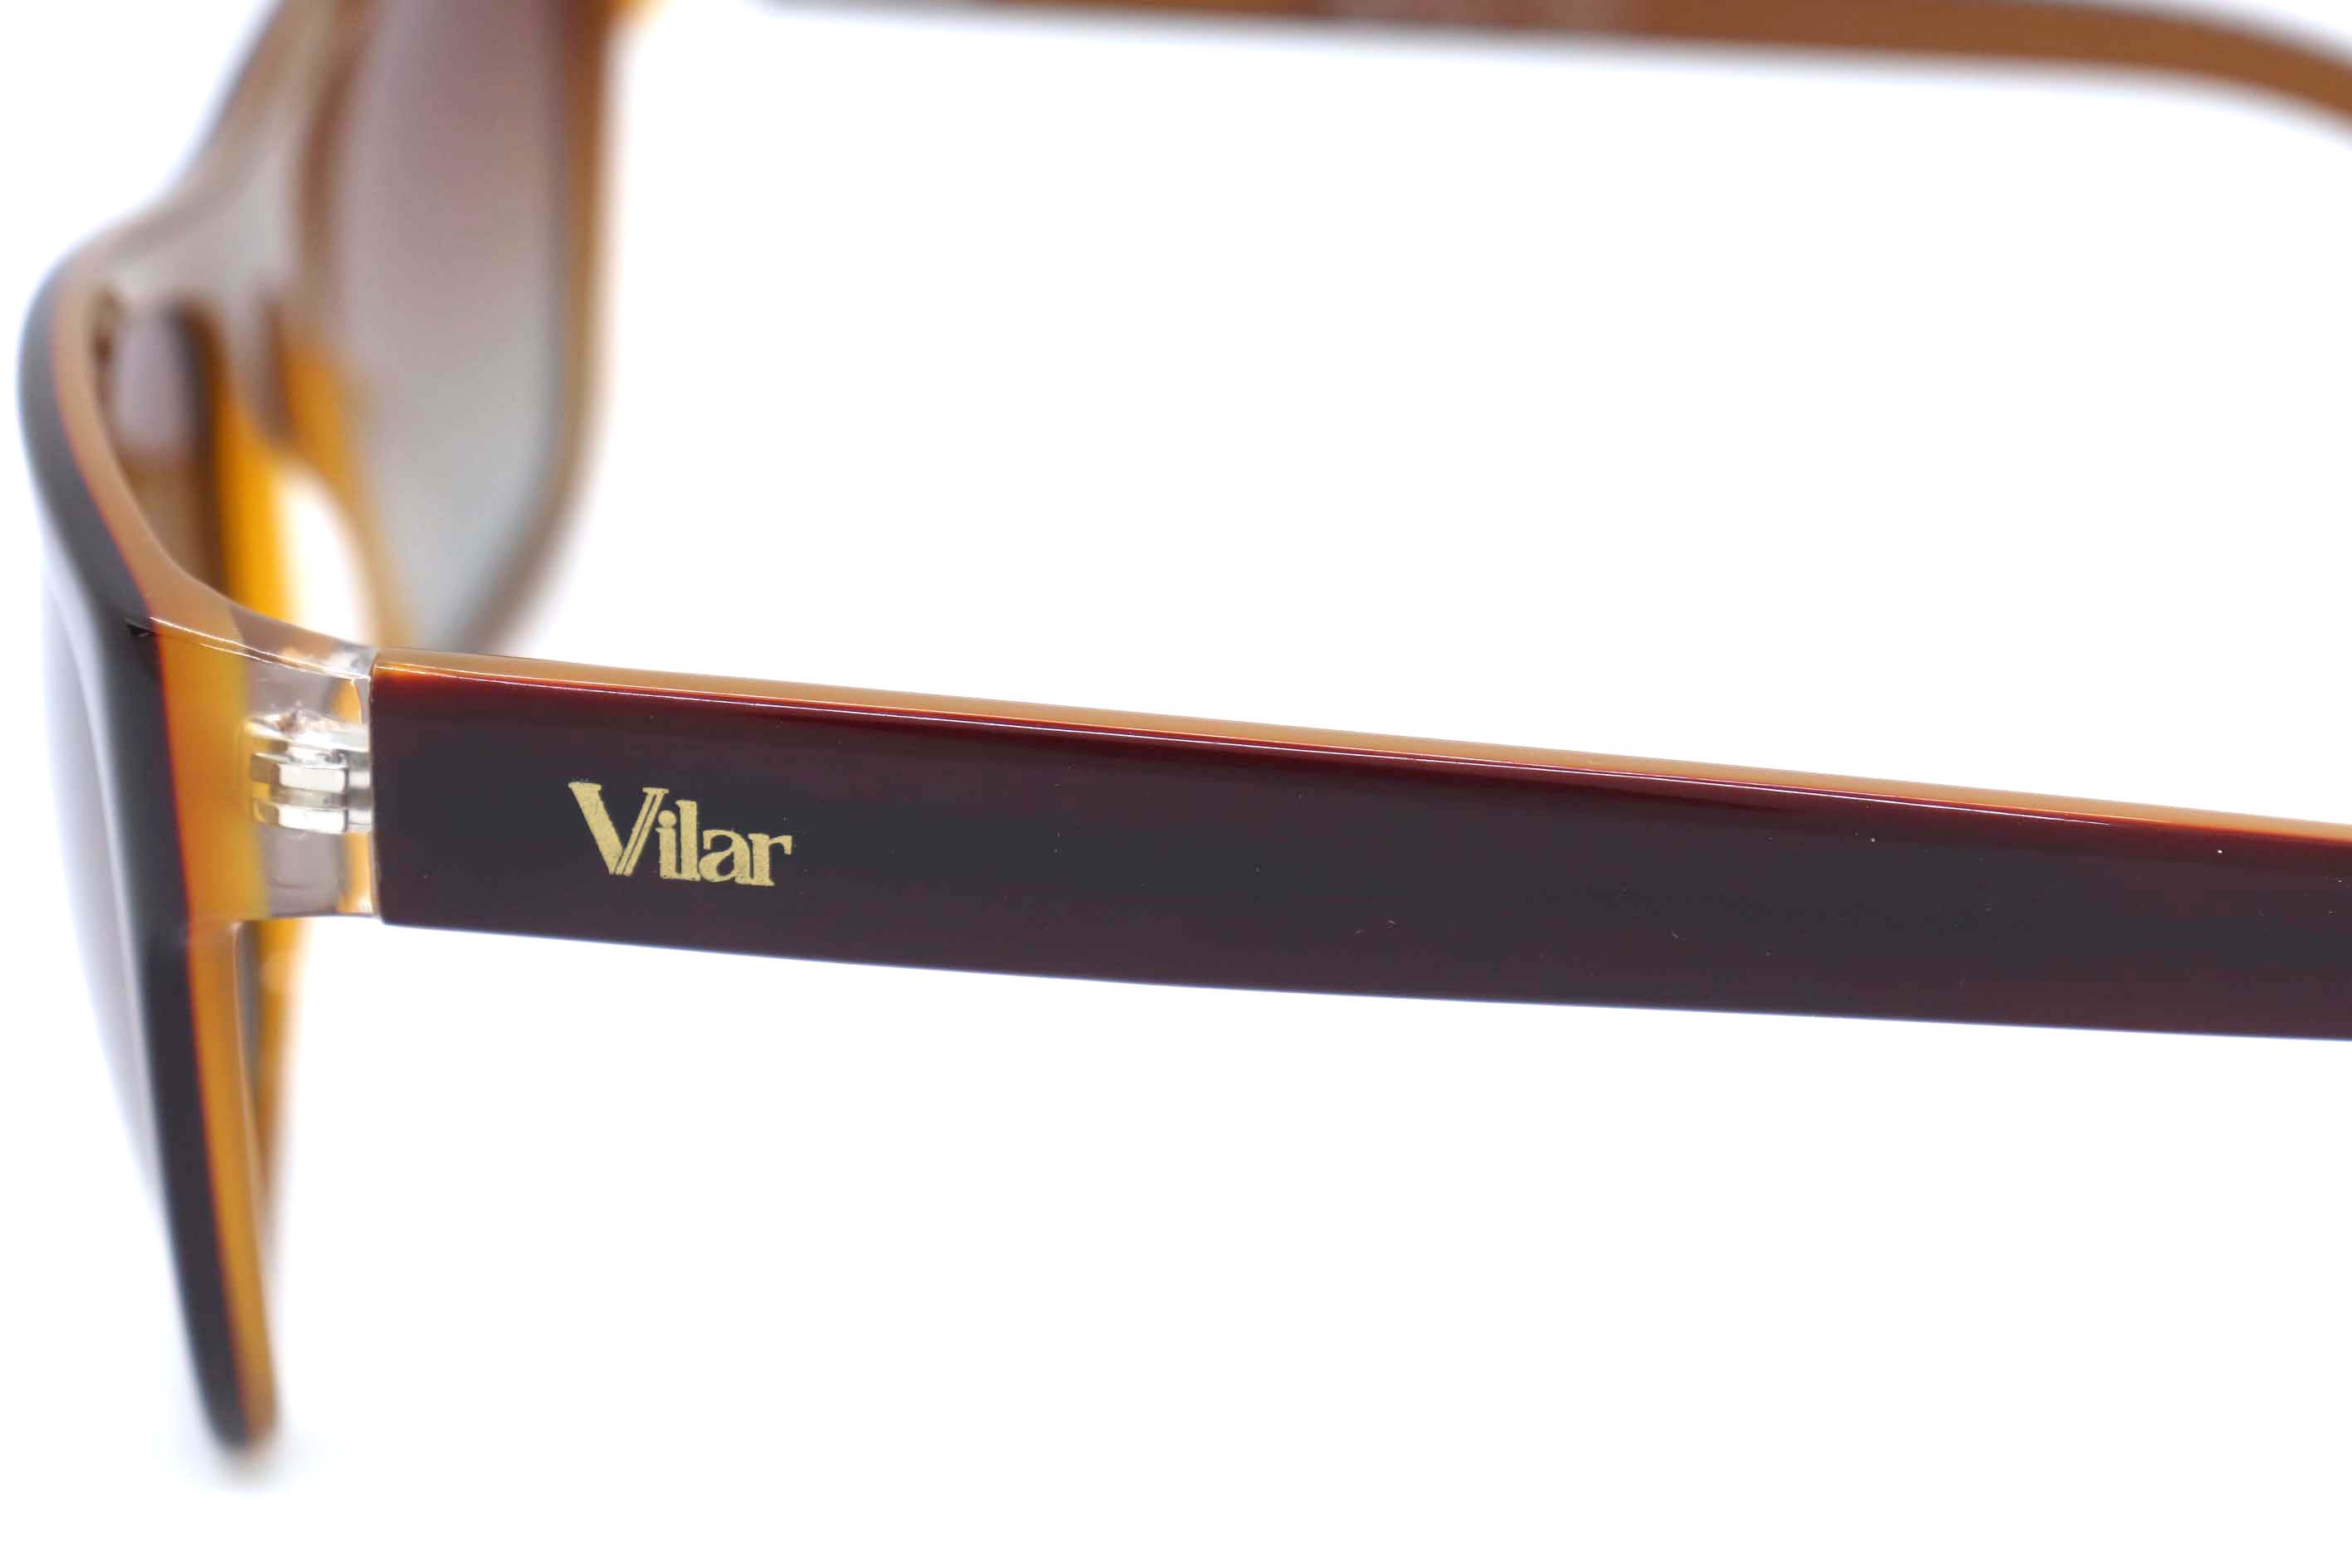 Vilar Sunglasses -19301-005-57-17-145